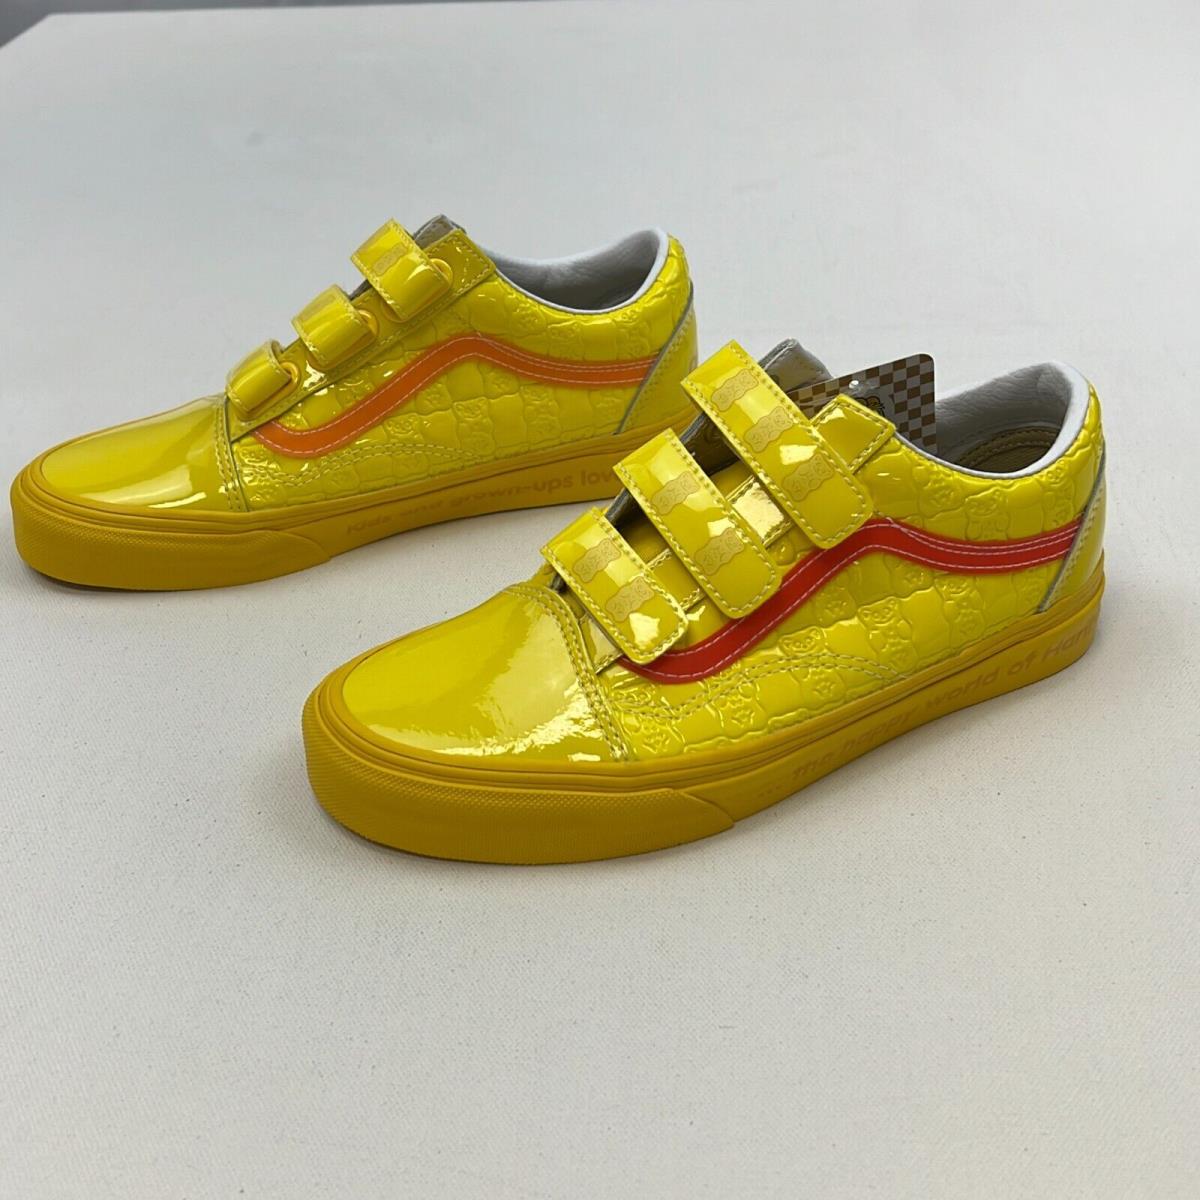 Vans Old Skool V VN0A3D29BK2 Haribo Yellow Check Sneaker Shoes Sz M 6 W 7.5